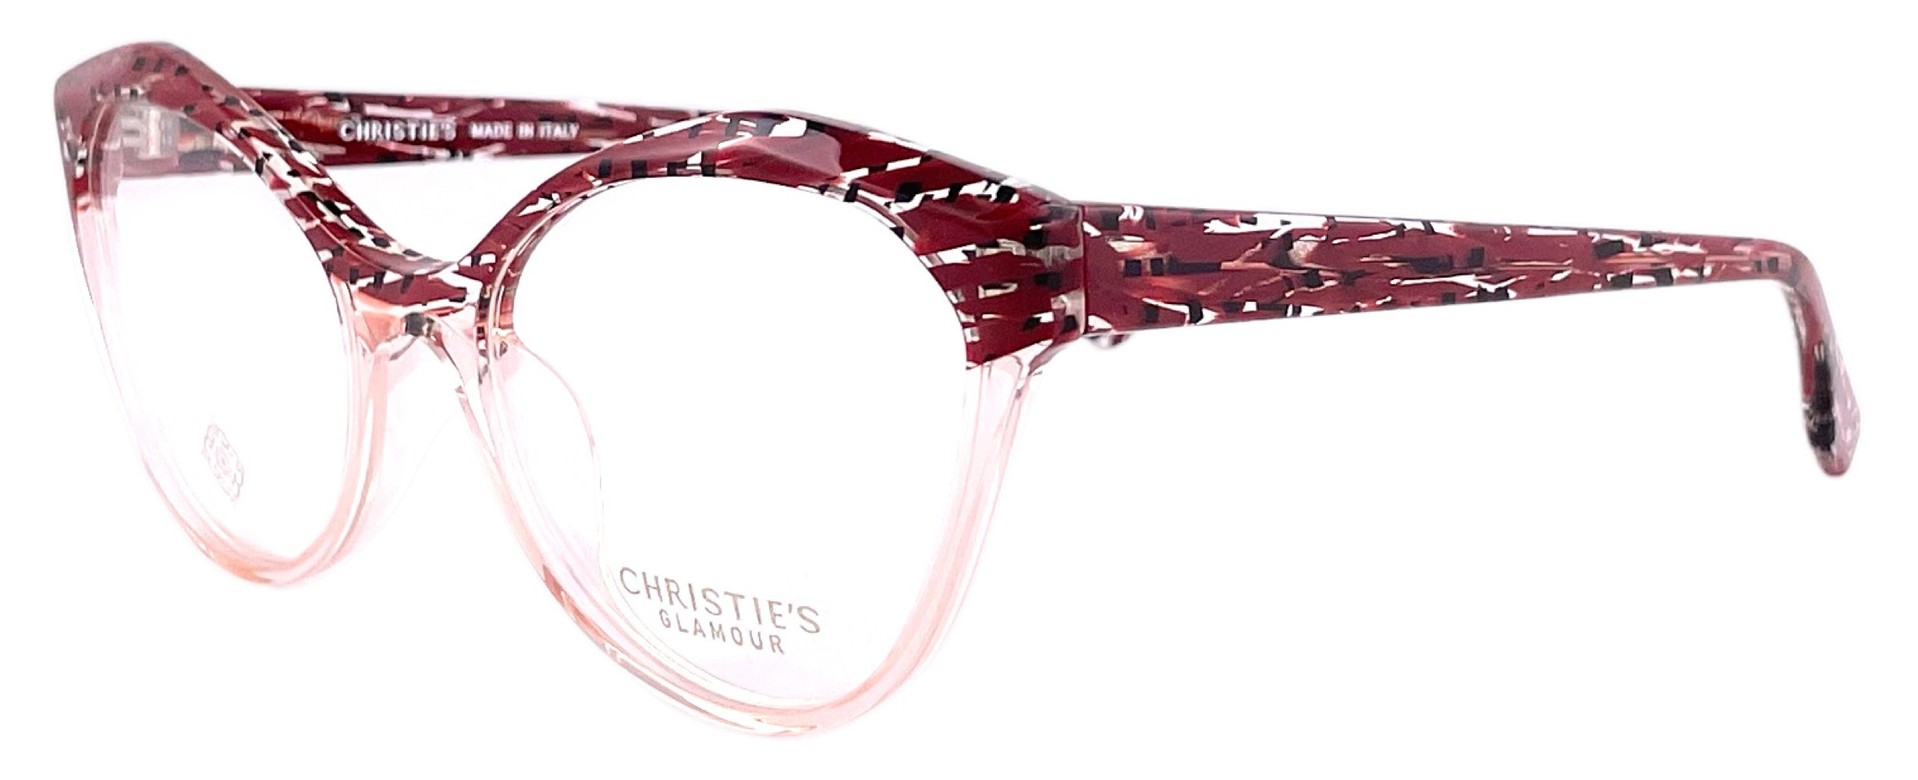 Christie's Glamour11 C502 2